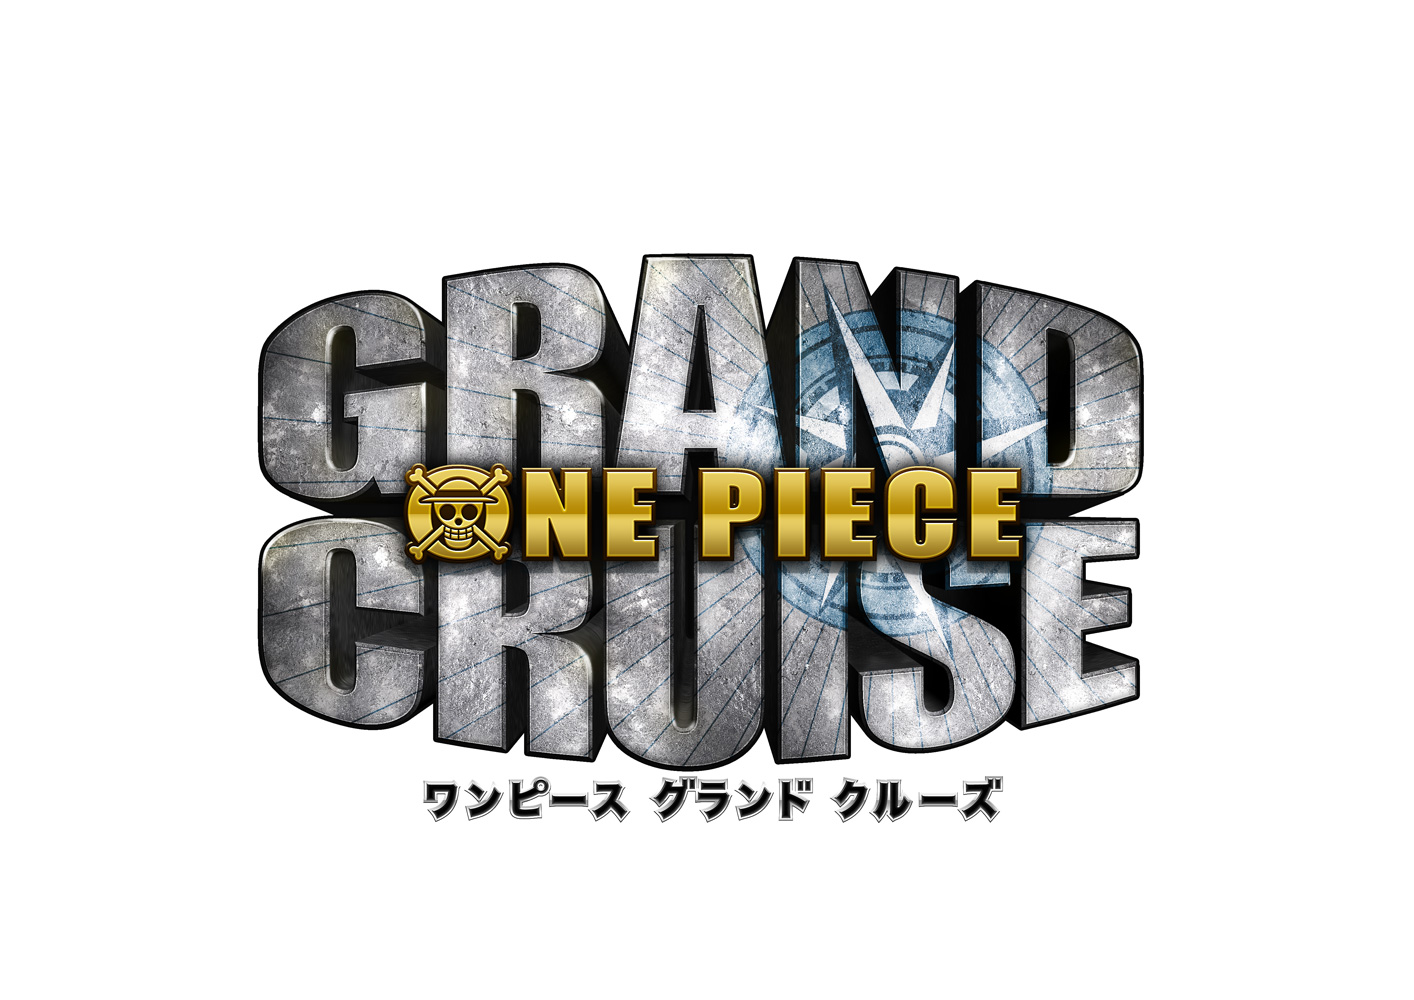 One Piece連載周年記念発表会 開催